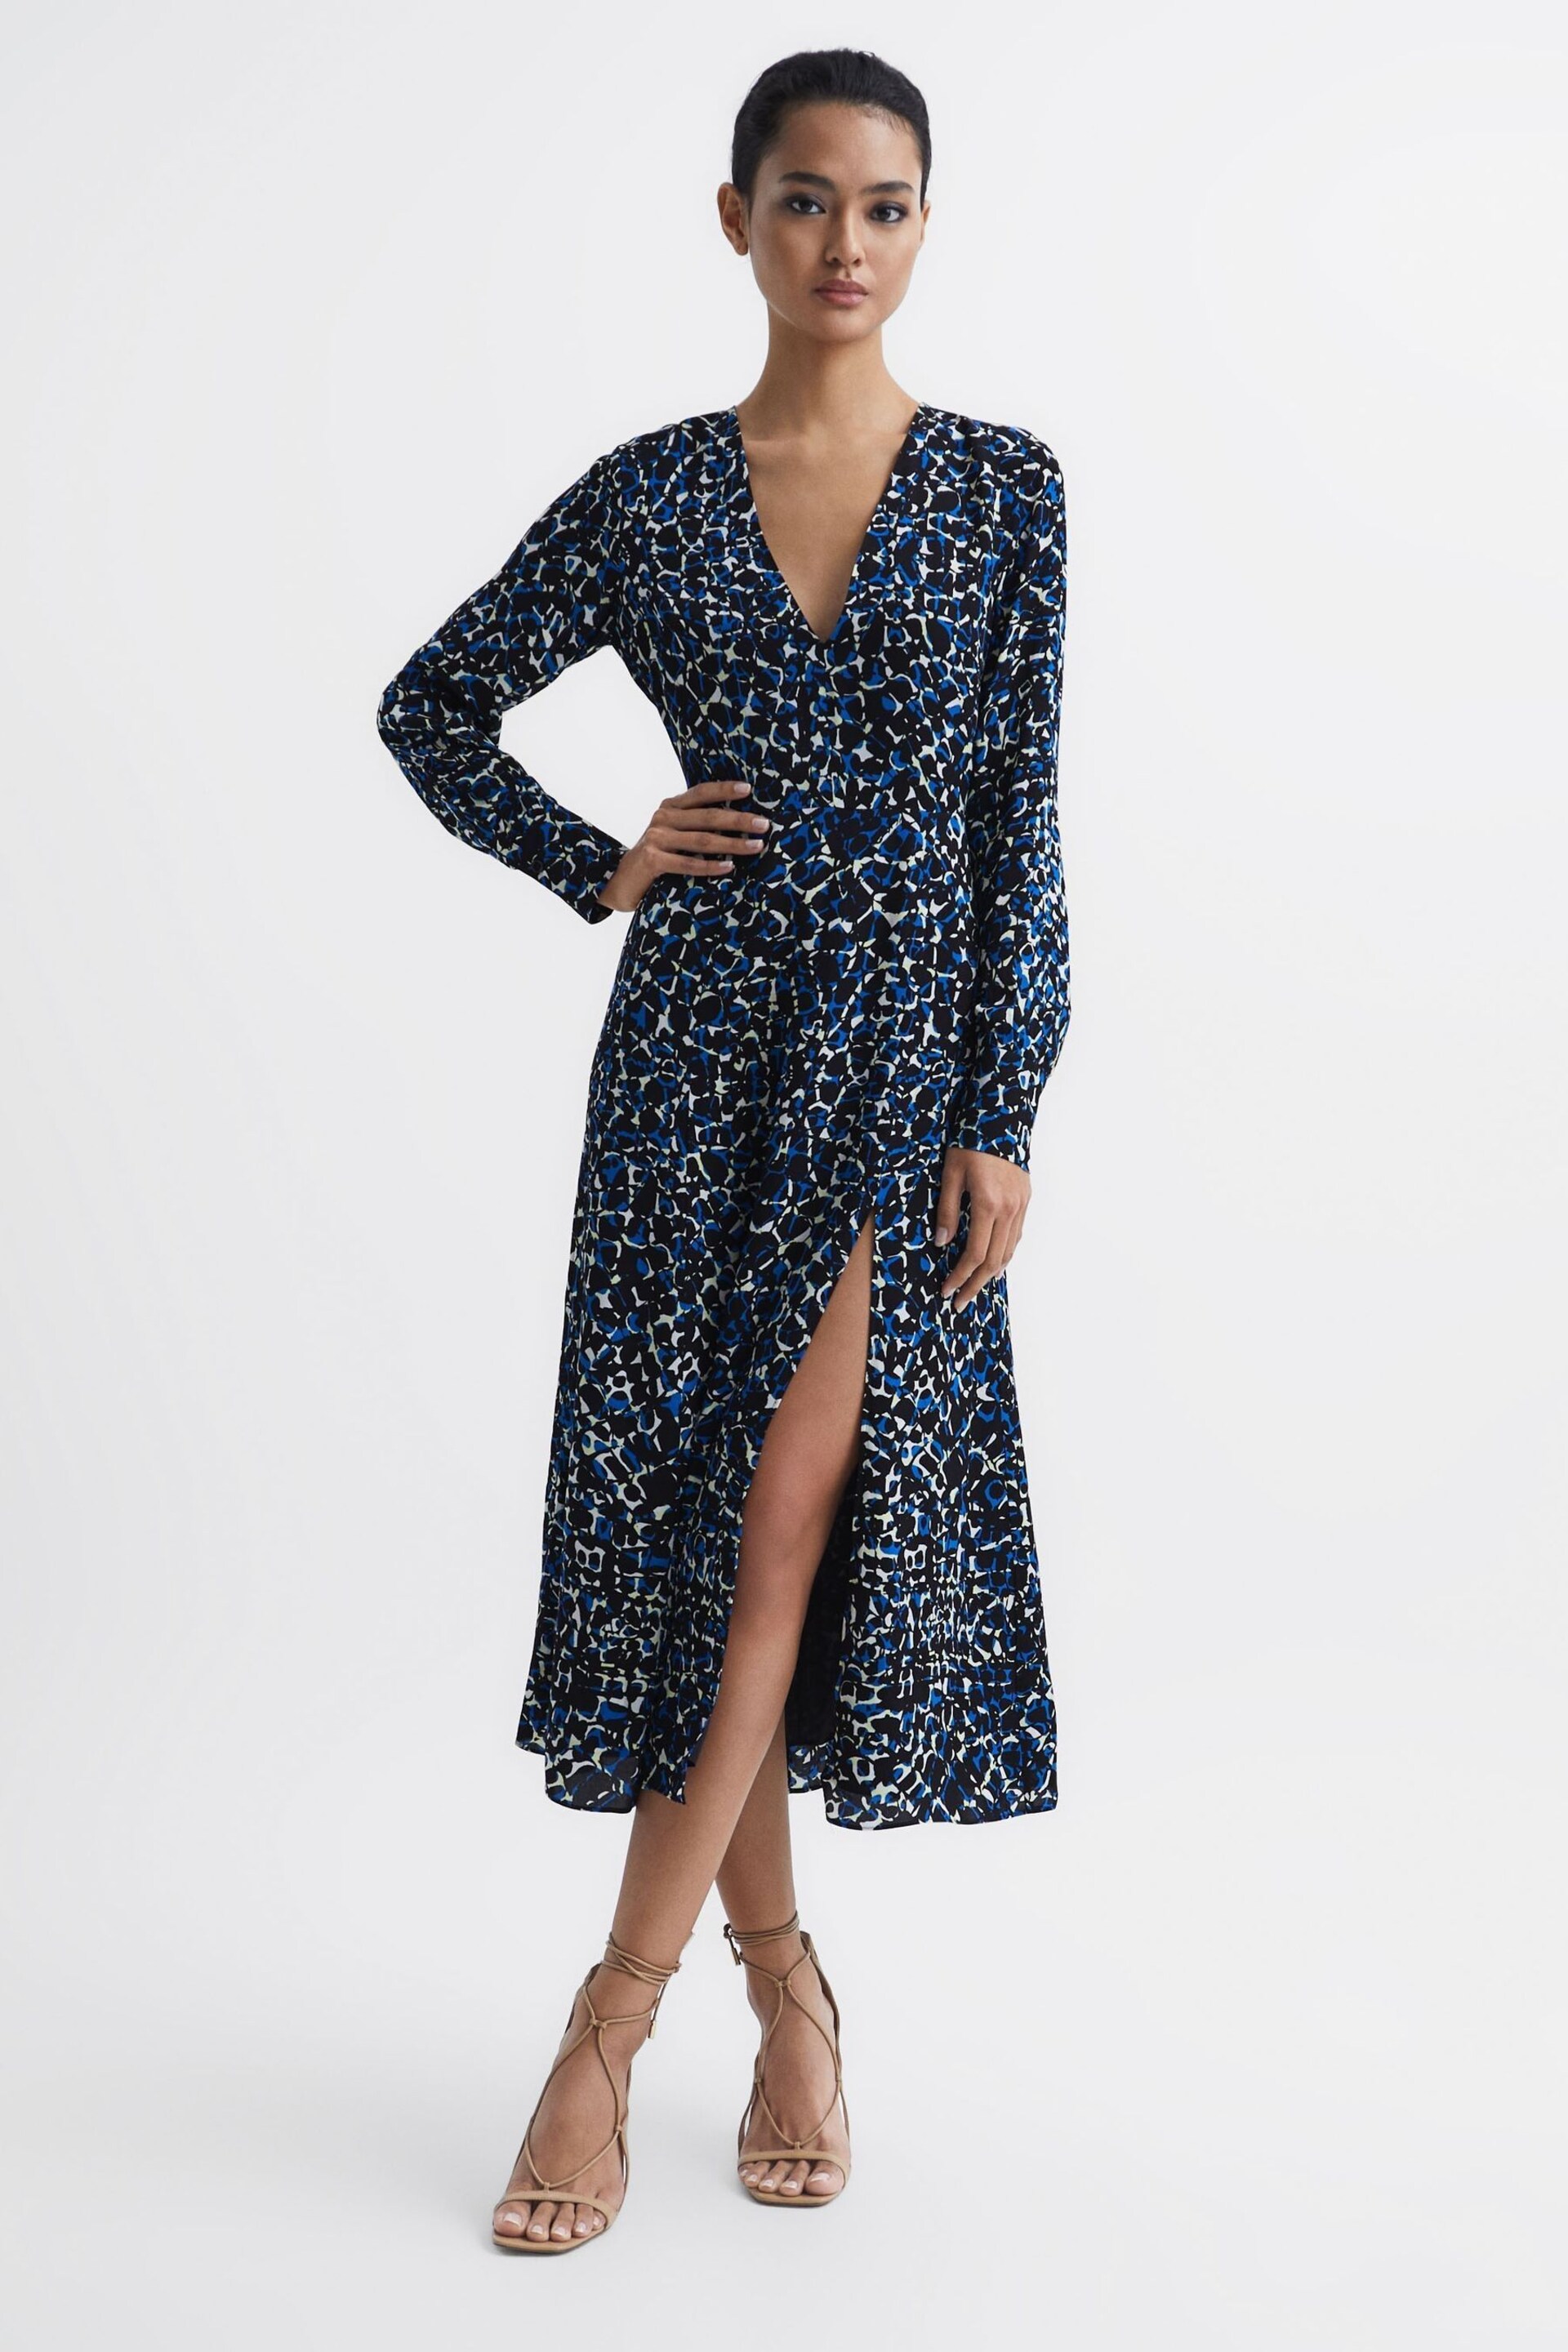 Reiss Navy/Blue Greta Long Sleeve Printed Midi Dress - Image 1 of 7